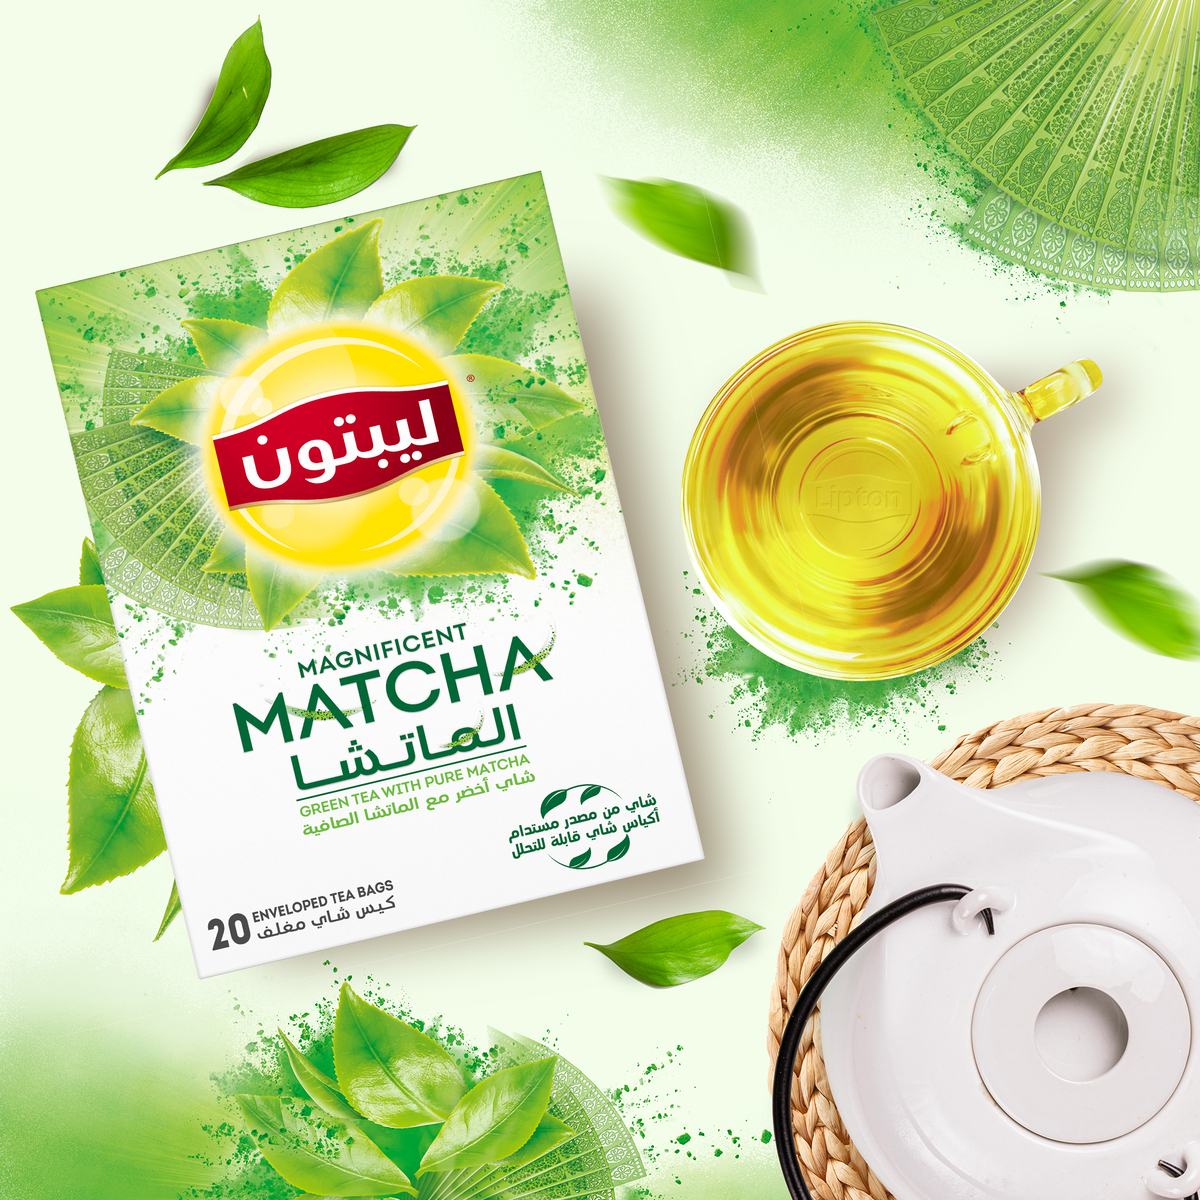 Lipton Magnificent Matcha Green Tea 20 Teabags